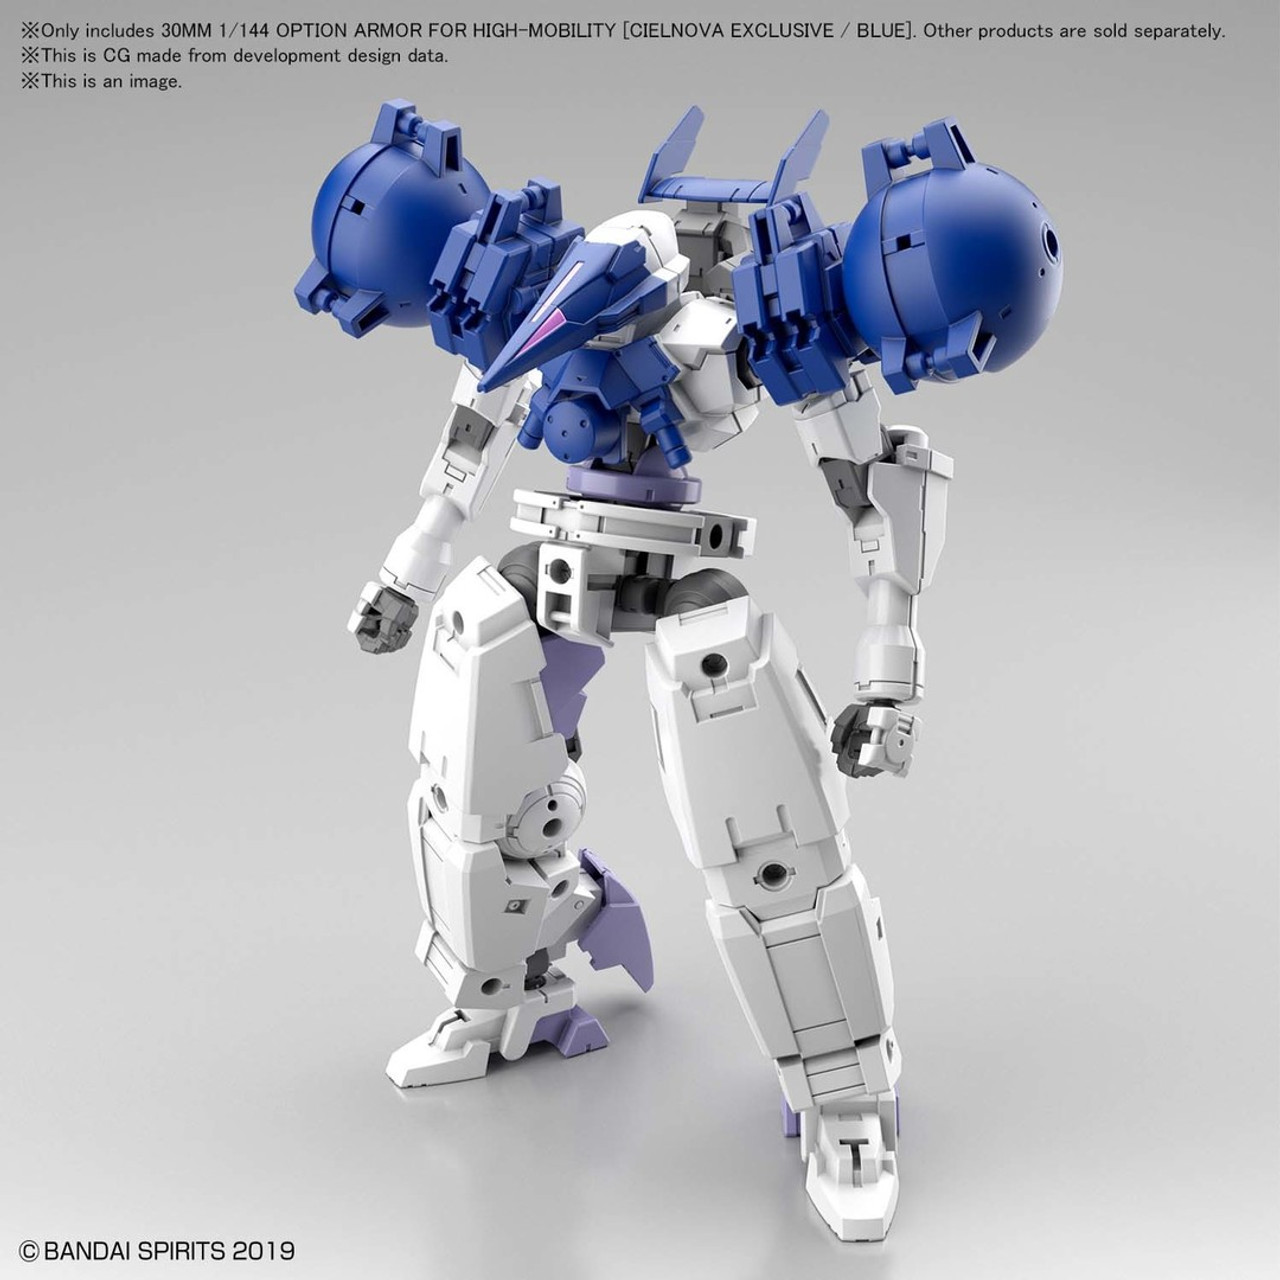 BAN2537339 Bandai Spirits 30 Minute Missions 1/144 #OP-27 Cielnova Option Armor For High Mobility (Blue)